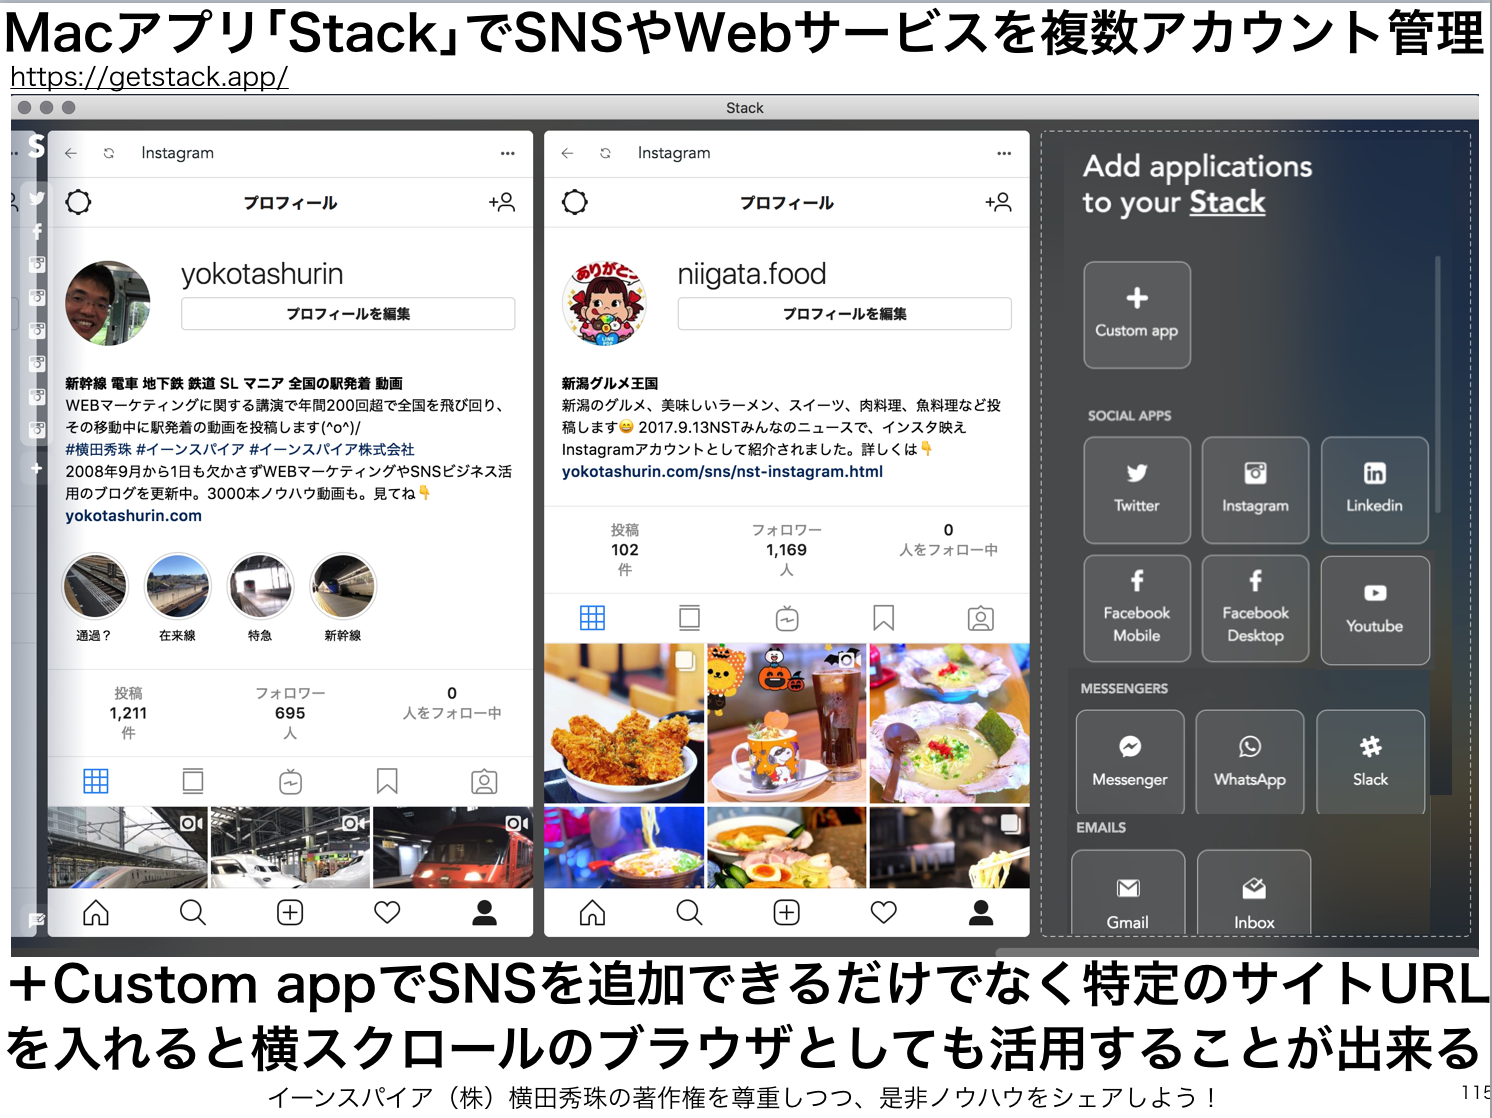 MacアプリStackでSNS･Webサービス複数アカウント管理